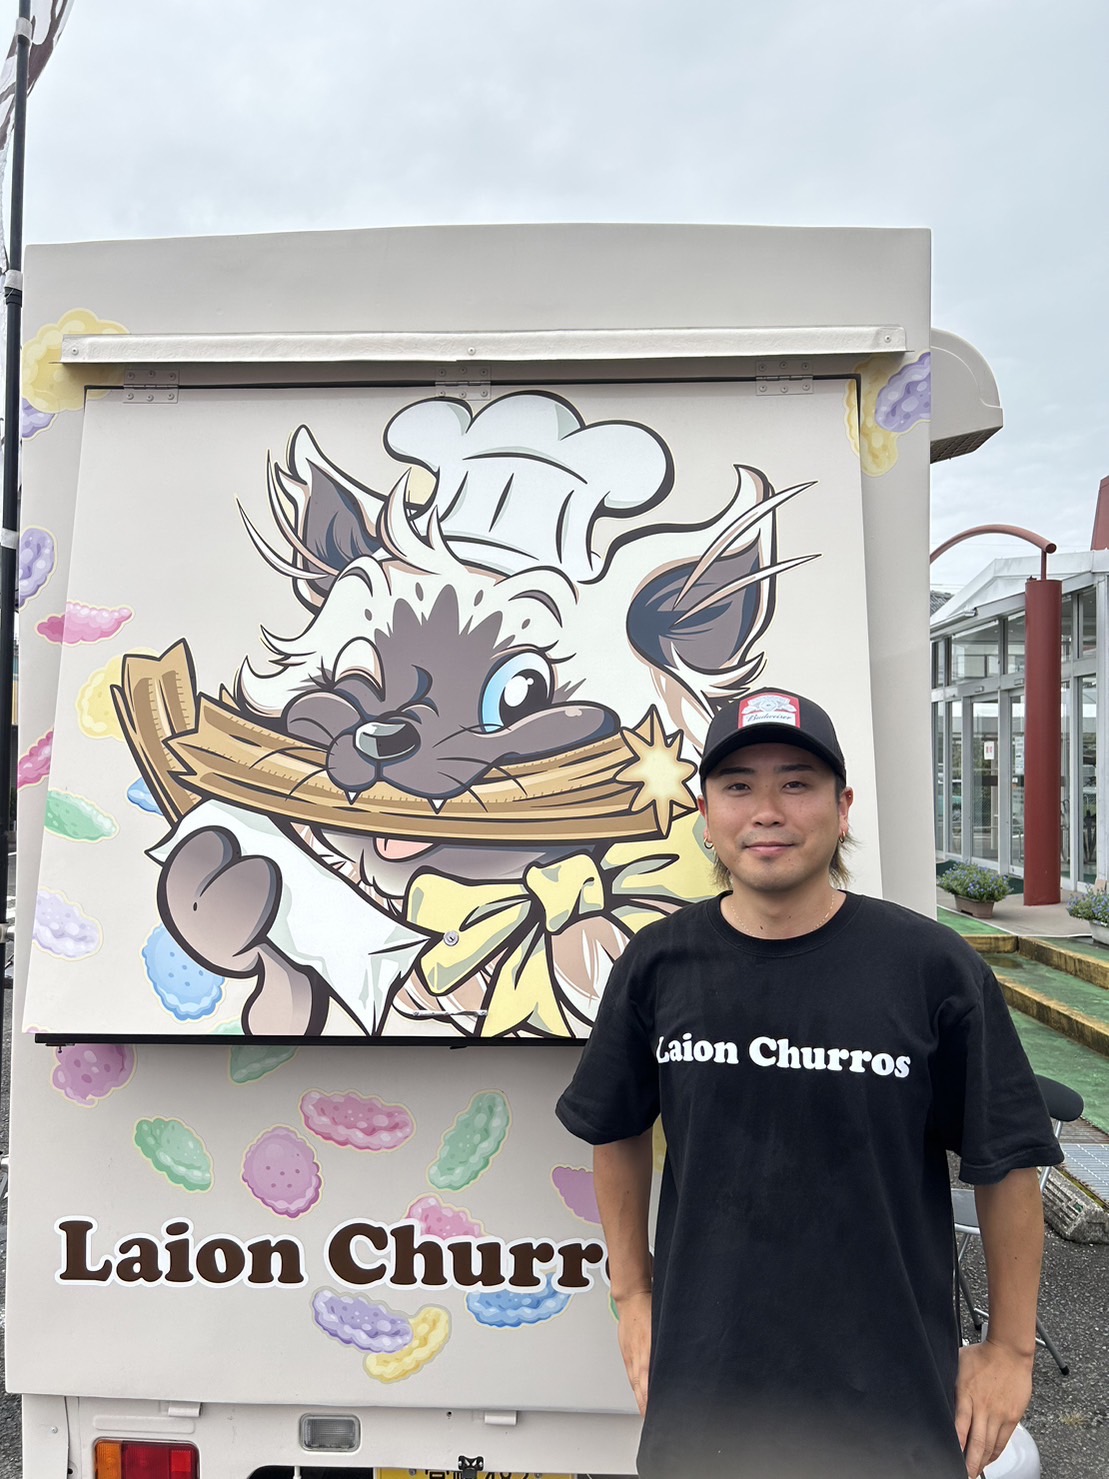 Laion Churros